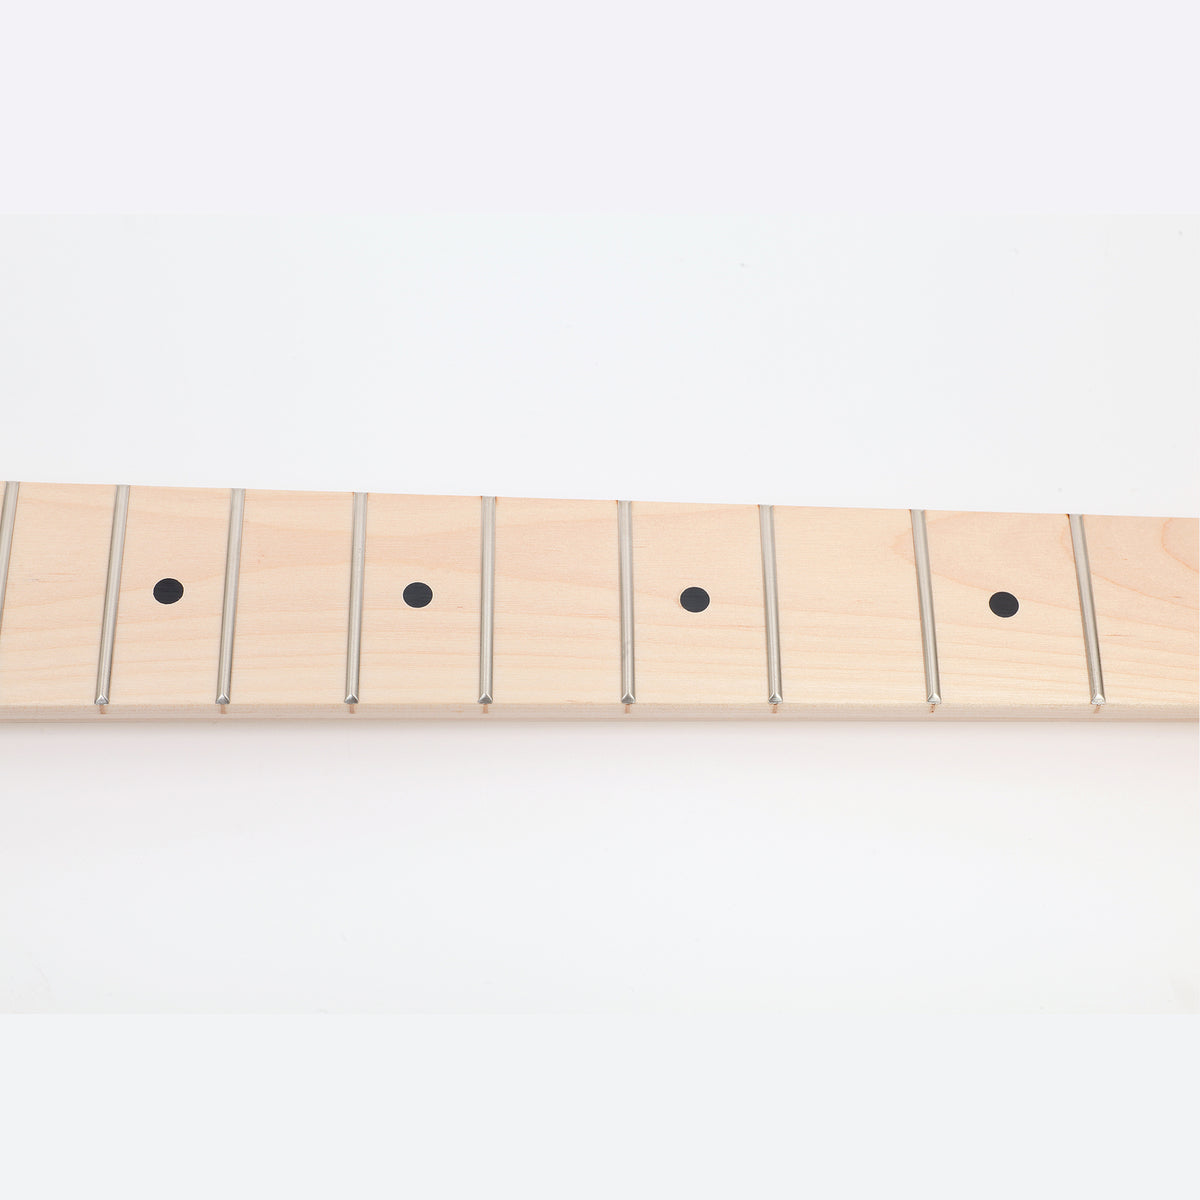 Stratocaster Two DIY Guitar Kit Fretboard